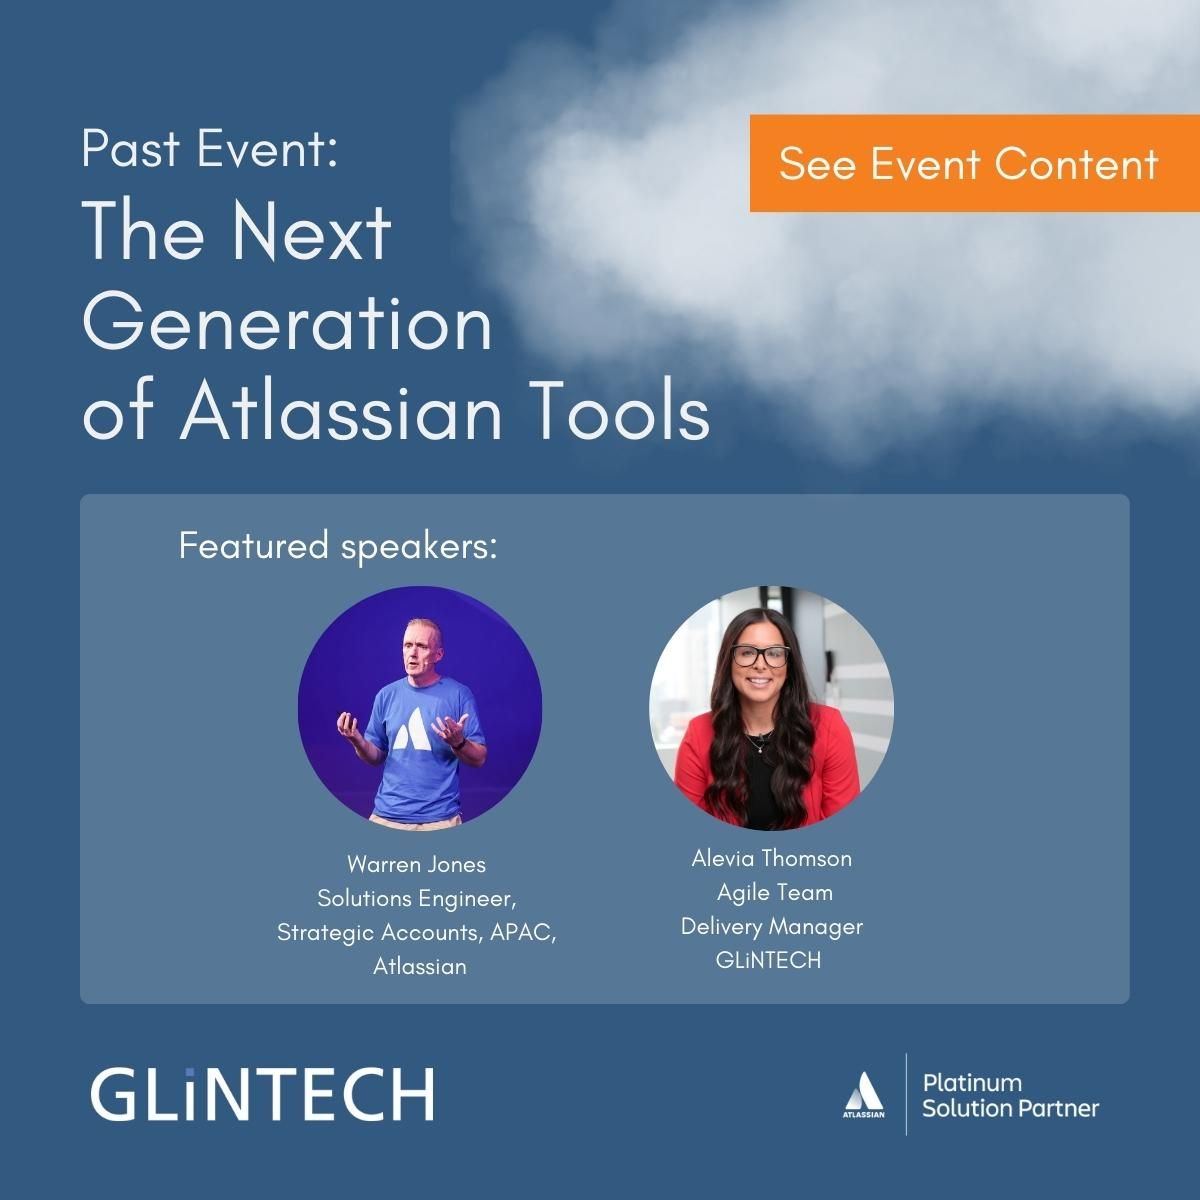 The Next Generation of Atlassian Tools